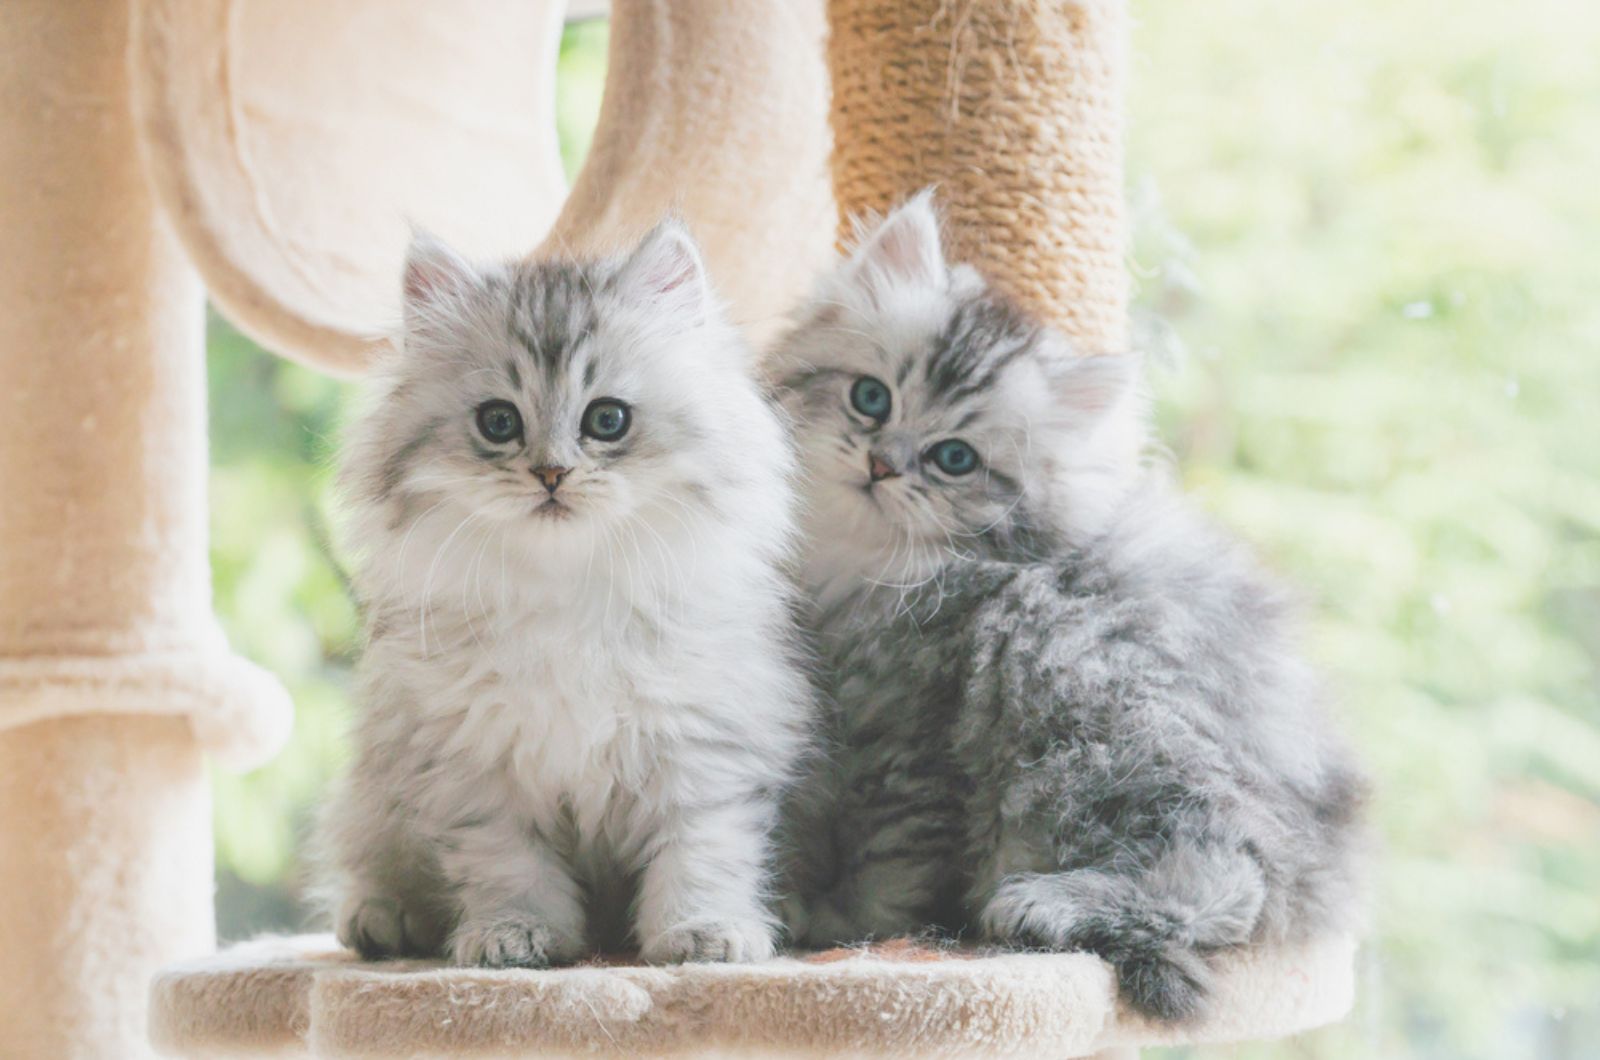 Twee schattige Perzische kittens die op kattentoren spelen